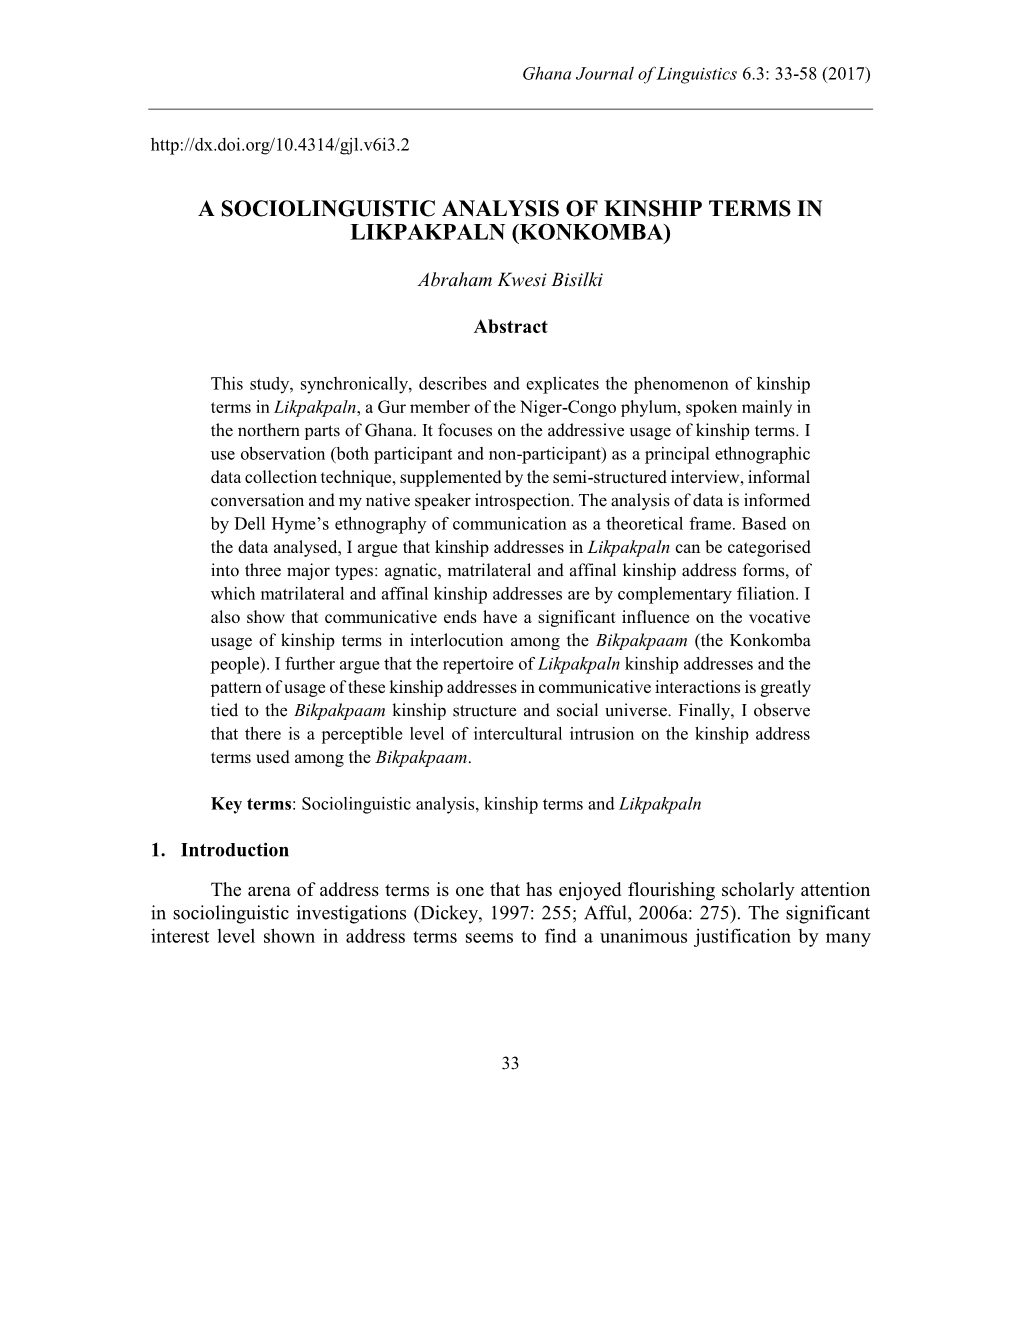 A Sociolinguistic Analysis of Kinship Terms in Likpakpaln (Konkomba)